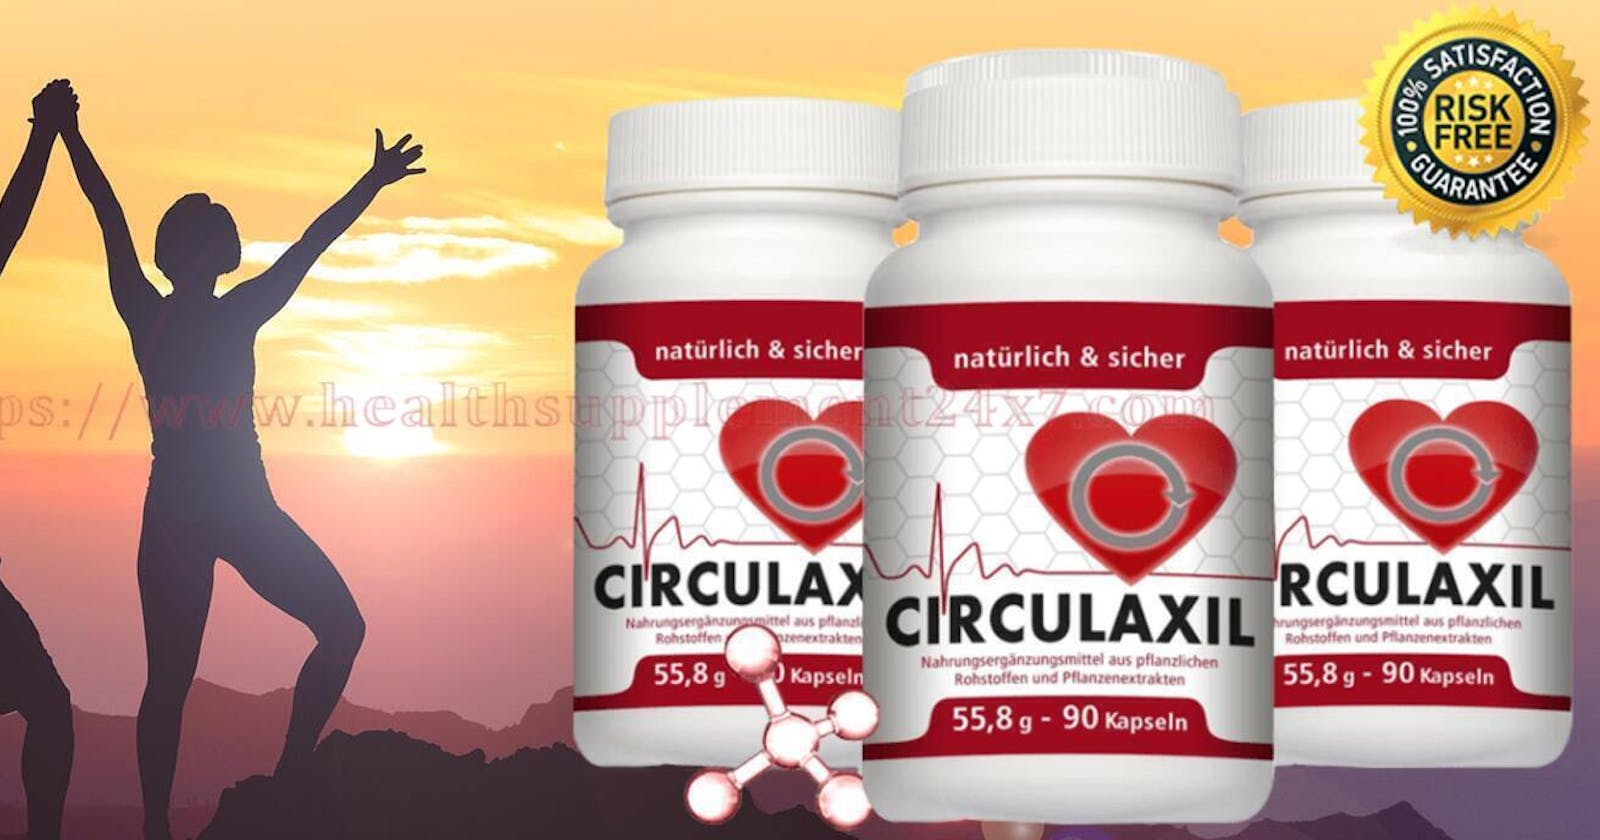 Circulaxil Blood Sugar Formula 100% Natural And Most Beneficial To Support Optimum Blood Sugar Level(Spam Or Legit)